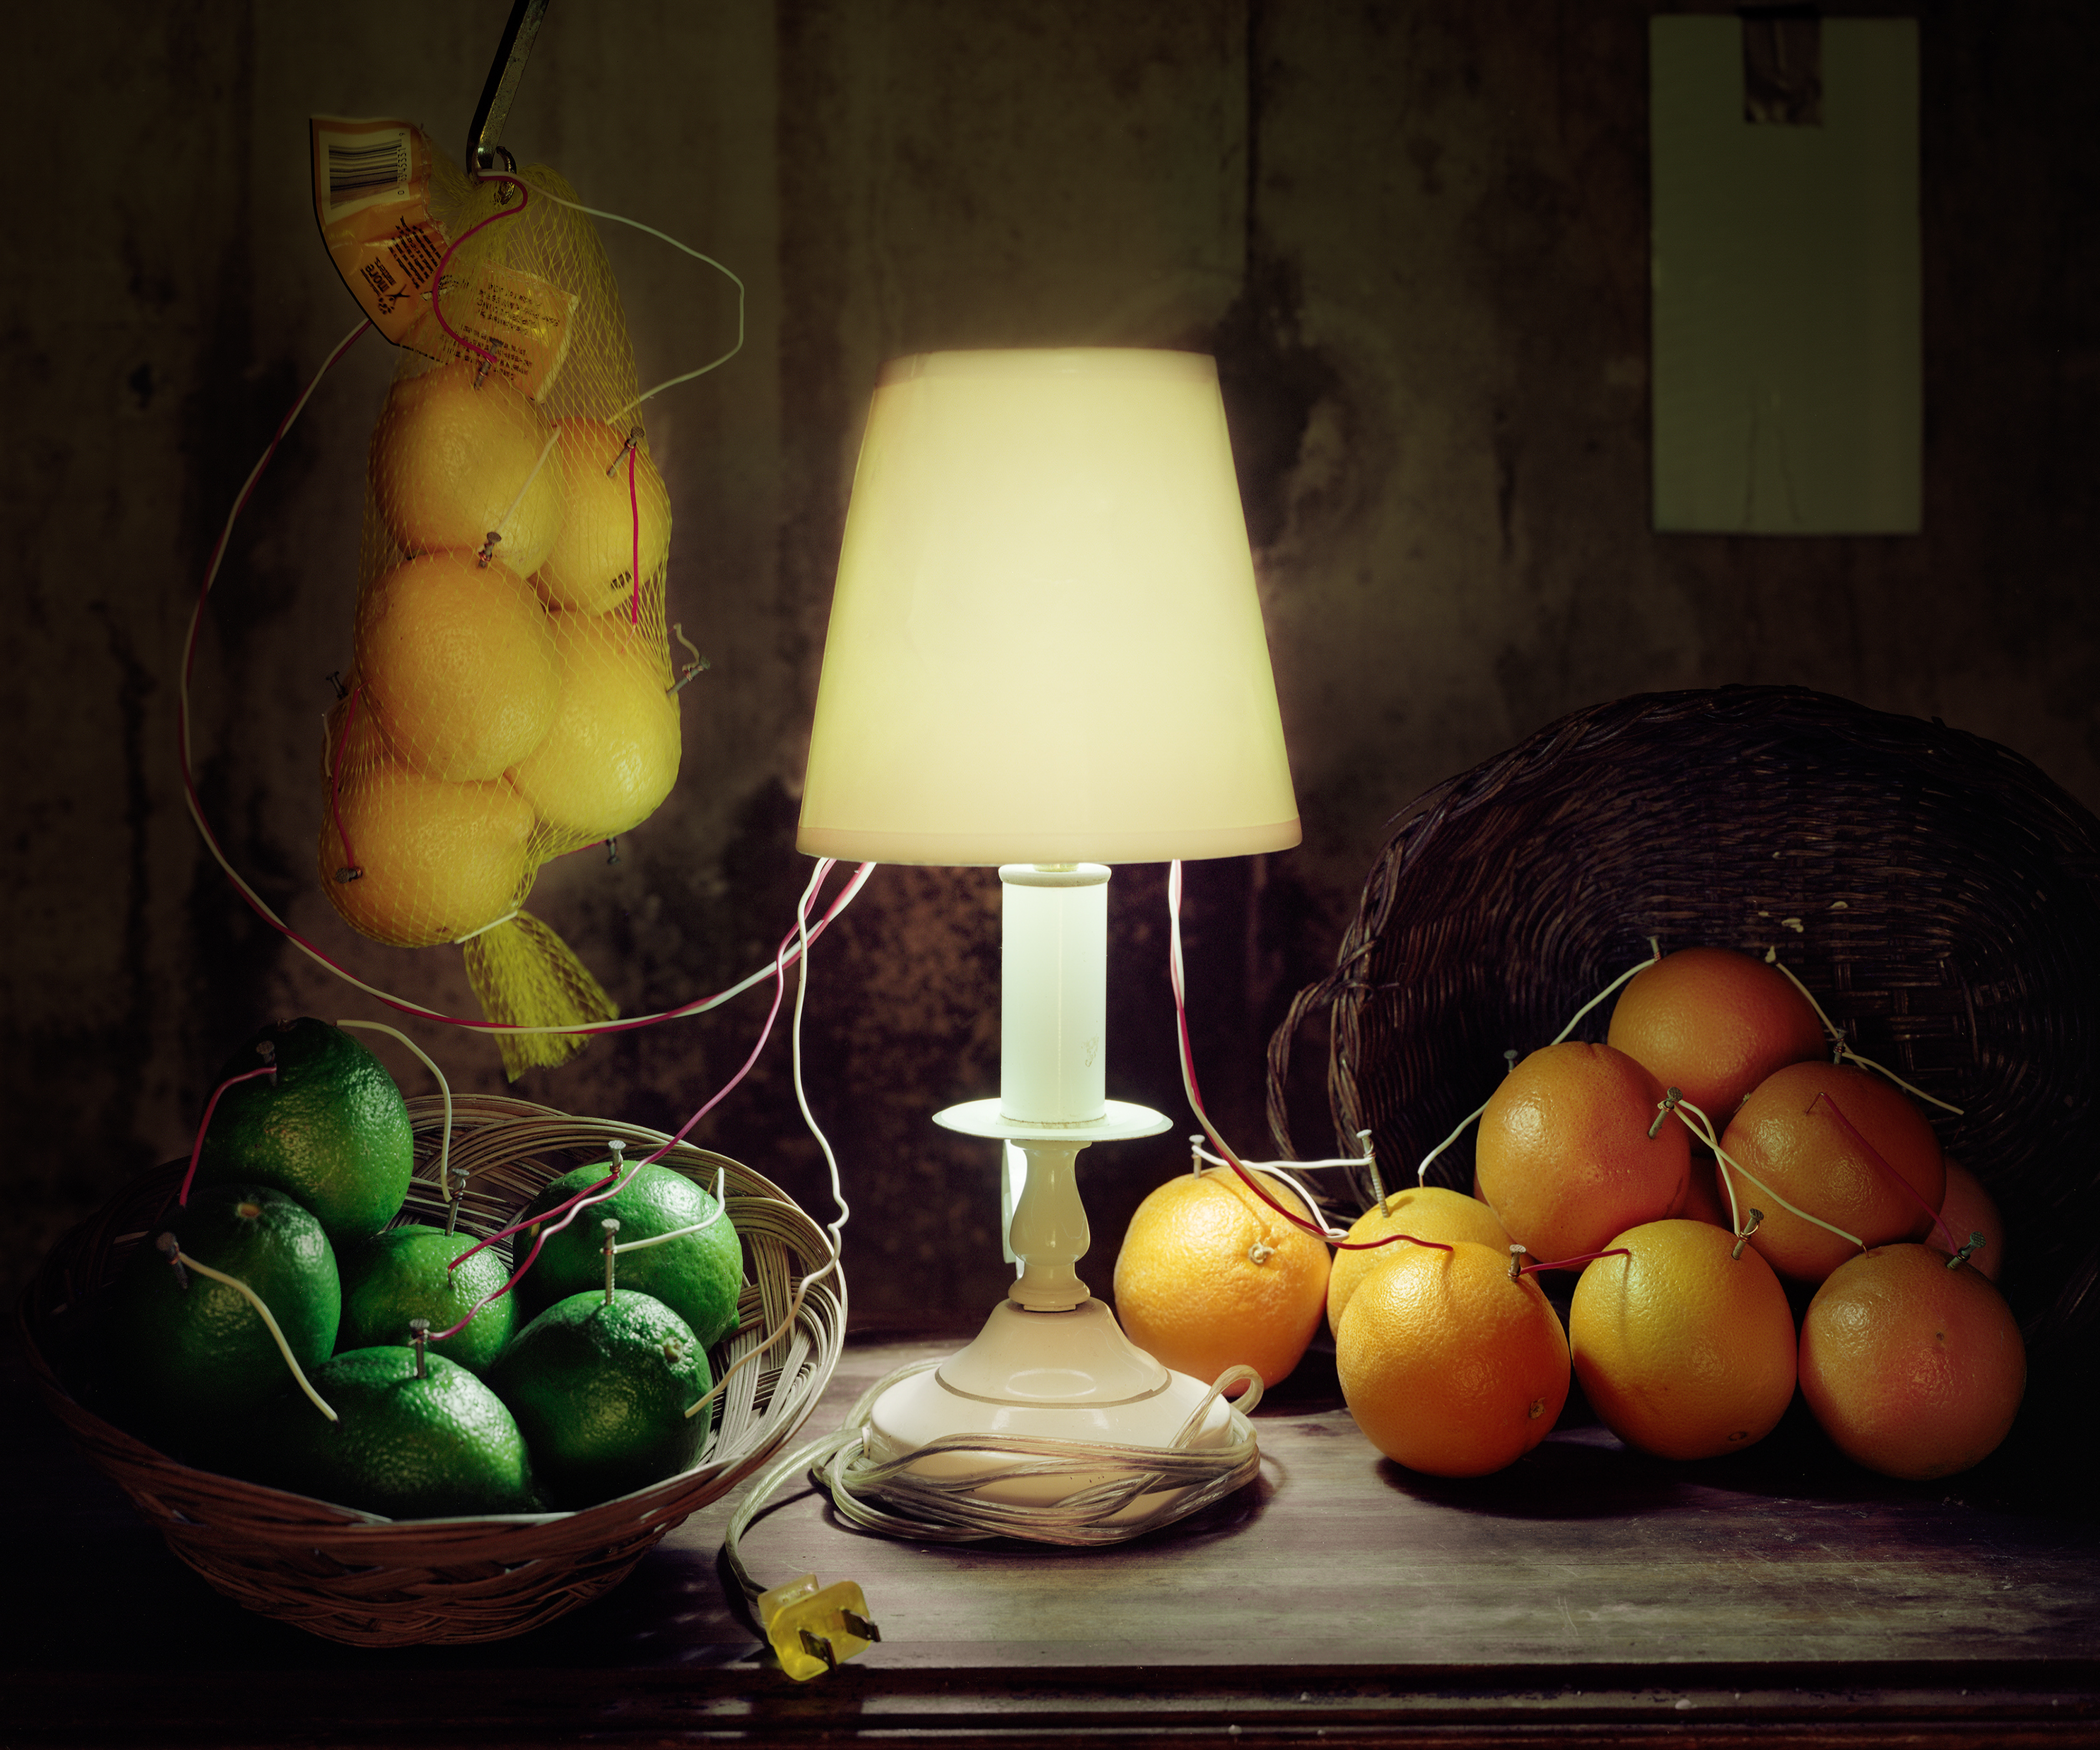 Back to Light - Fruit Battery Still Life (Citrus), 2012